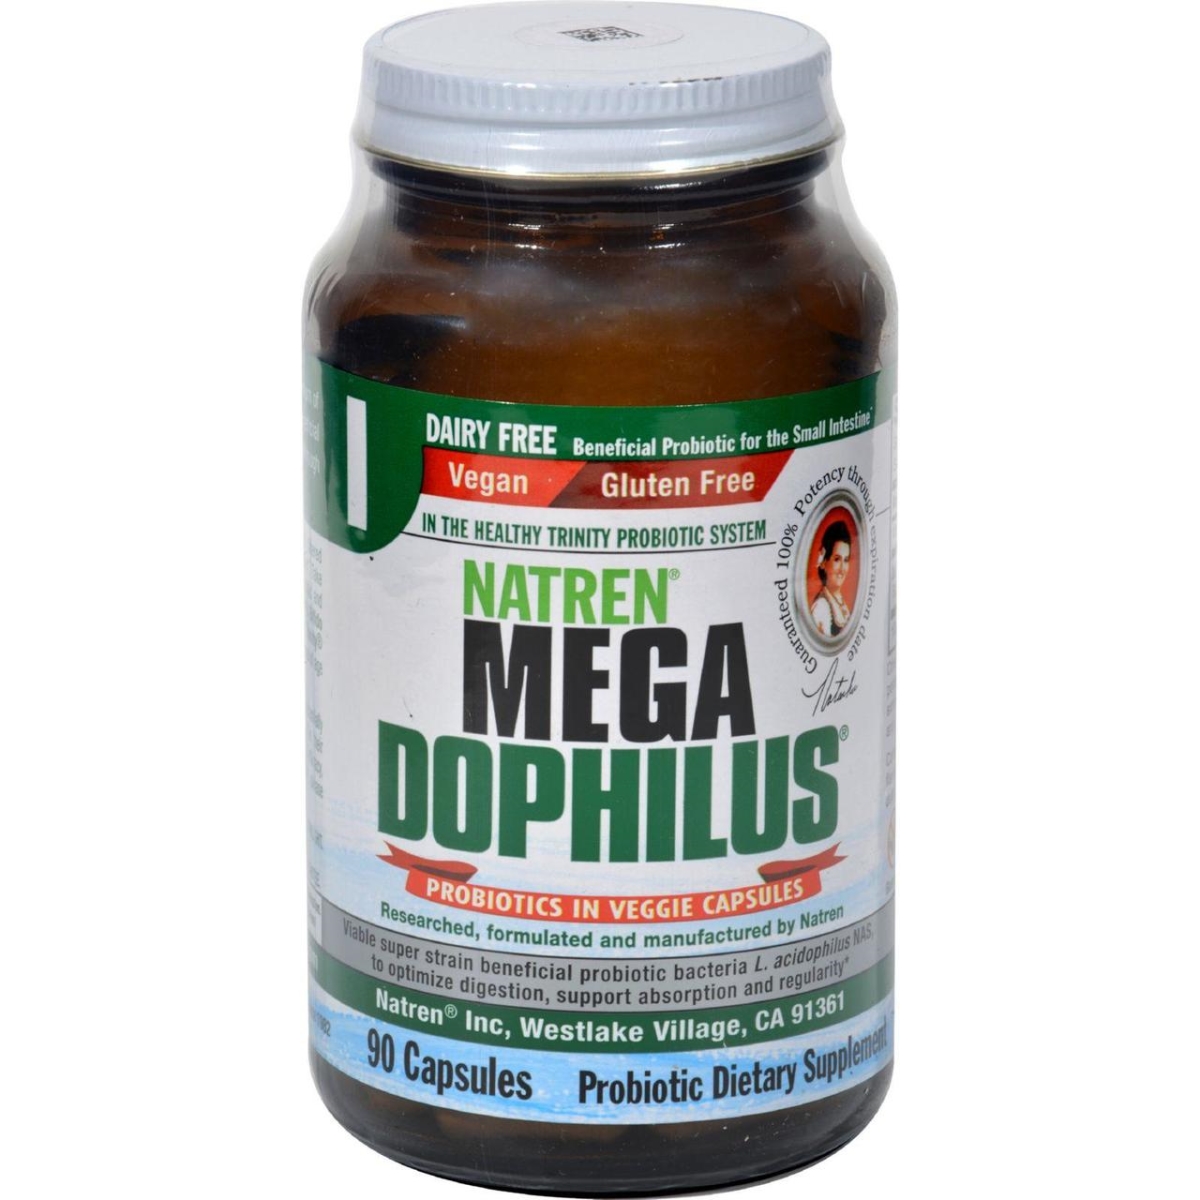 Hg0494997 Mega Dophilus Dairy Free - 90 Vegetarian Capsules